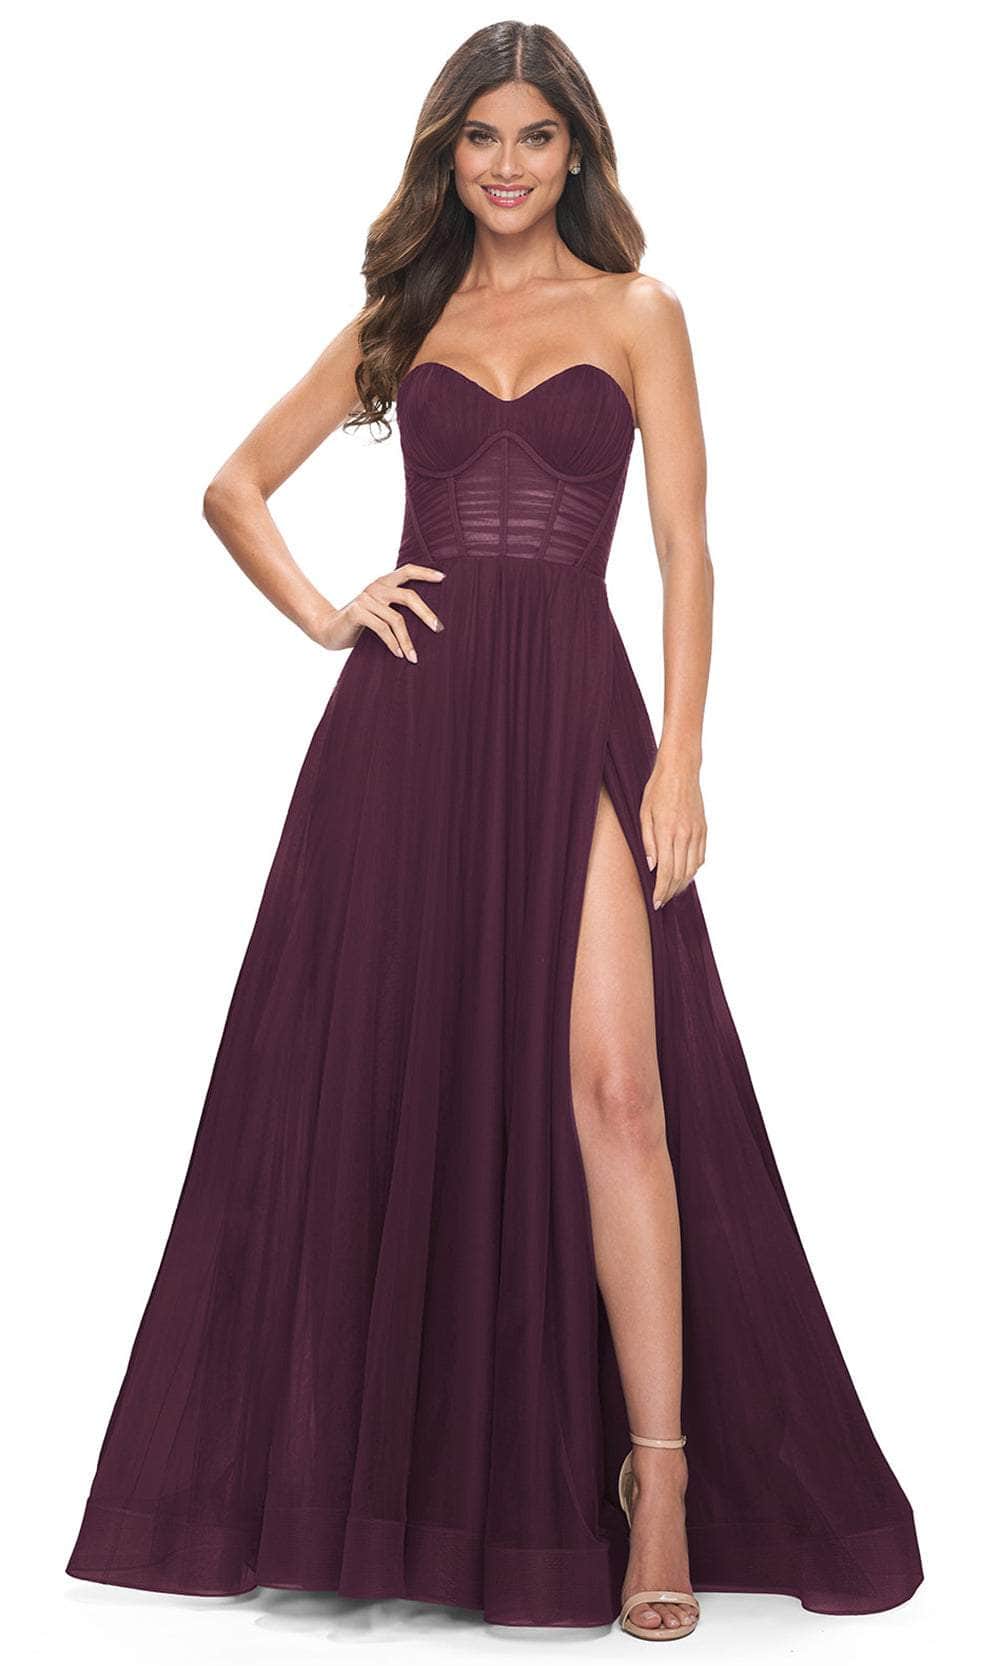 La Femme 31971 - Tulle High Slit Prom Dress Prom Dresses 00 / Dark Berry